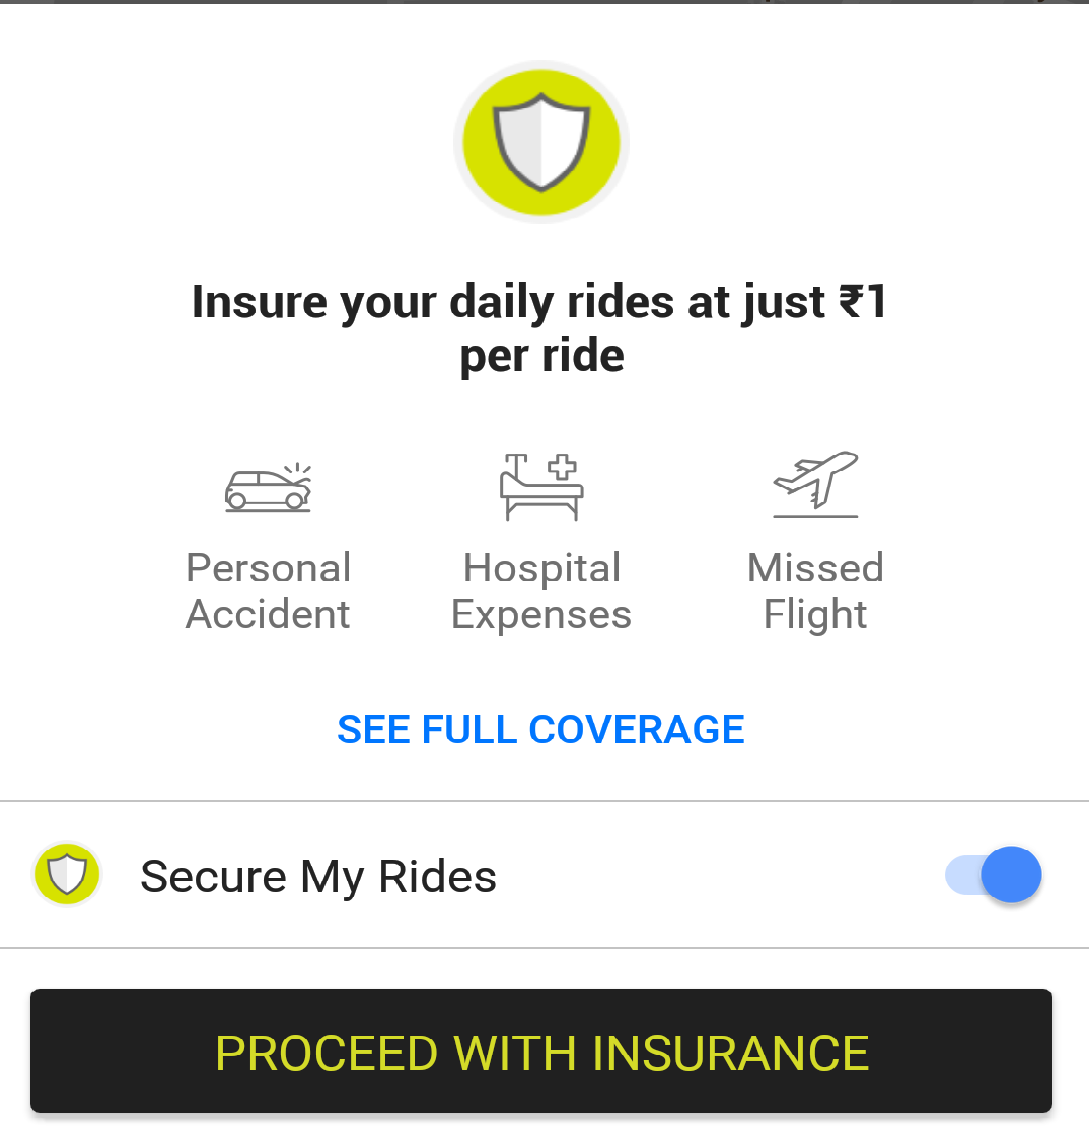 ola ride insurance